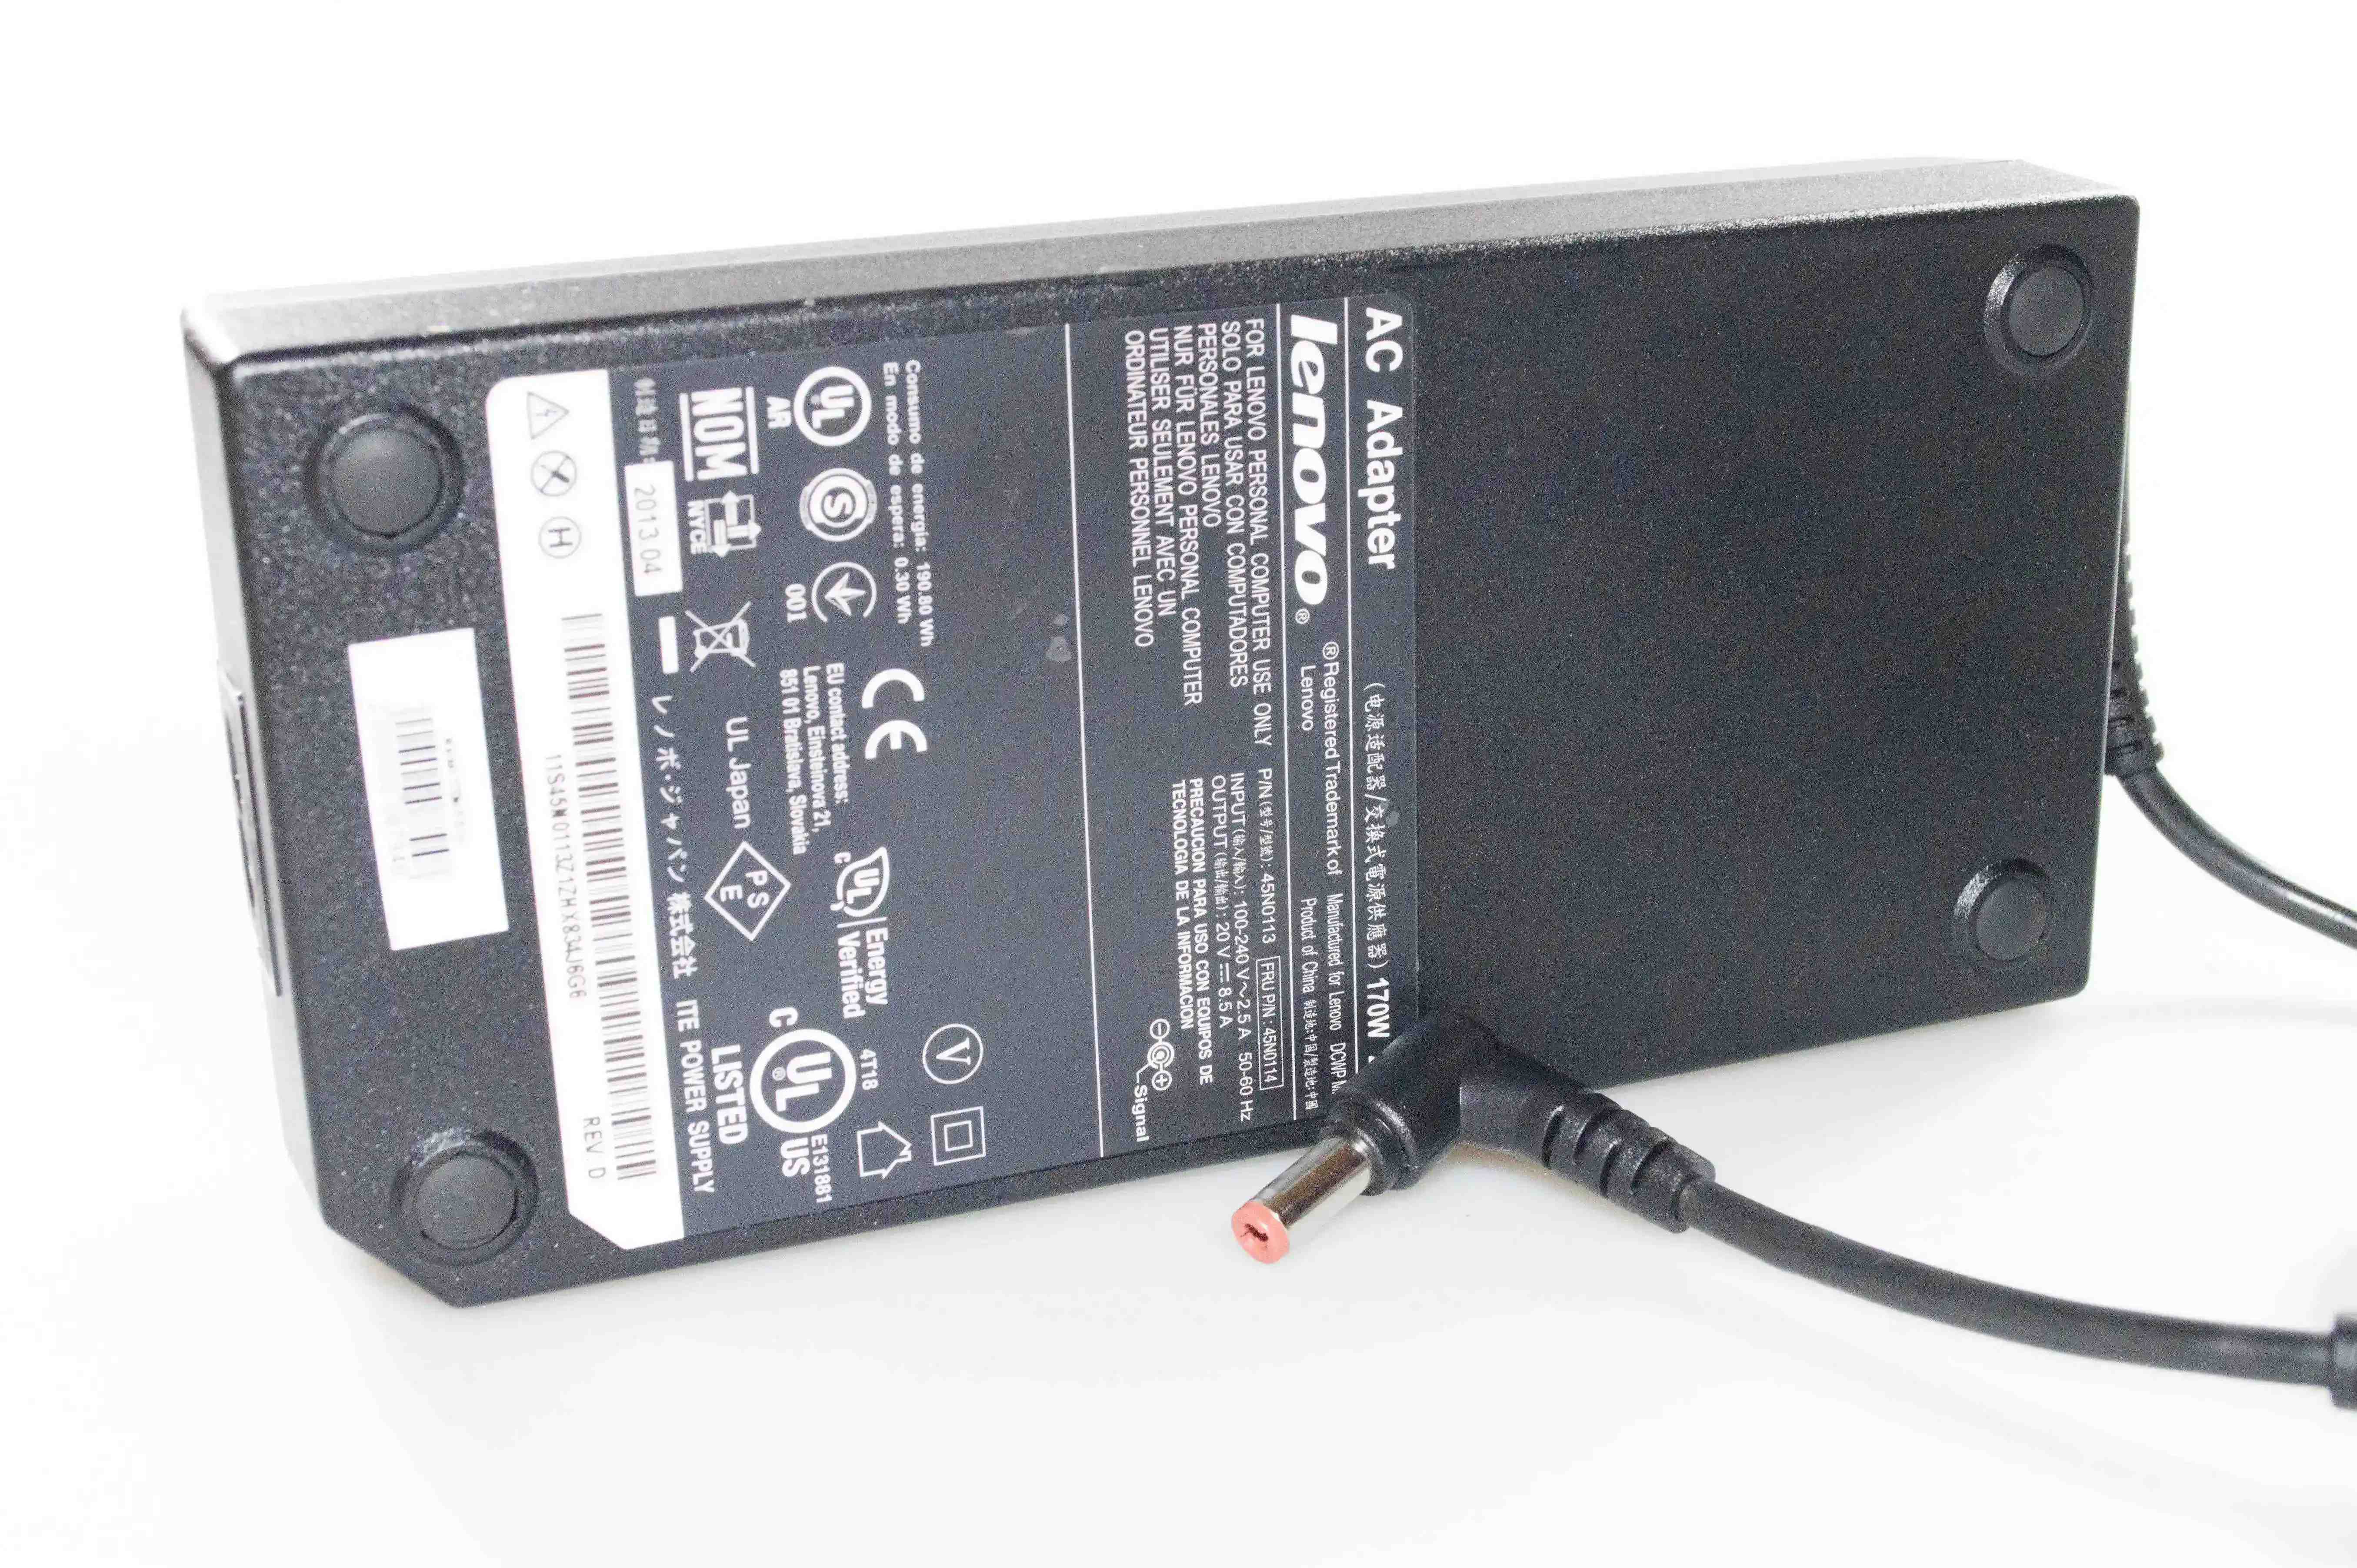 Lenovo IdeaPad Y510p(GT 755M SLI) 20V 8.5A 170W (5.5*2.5)